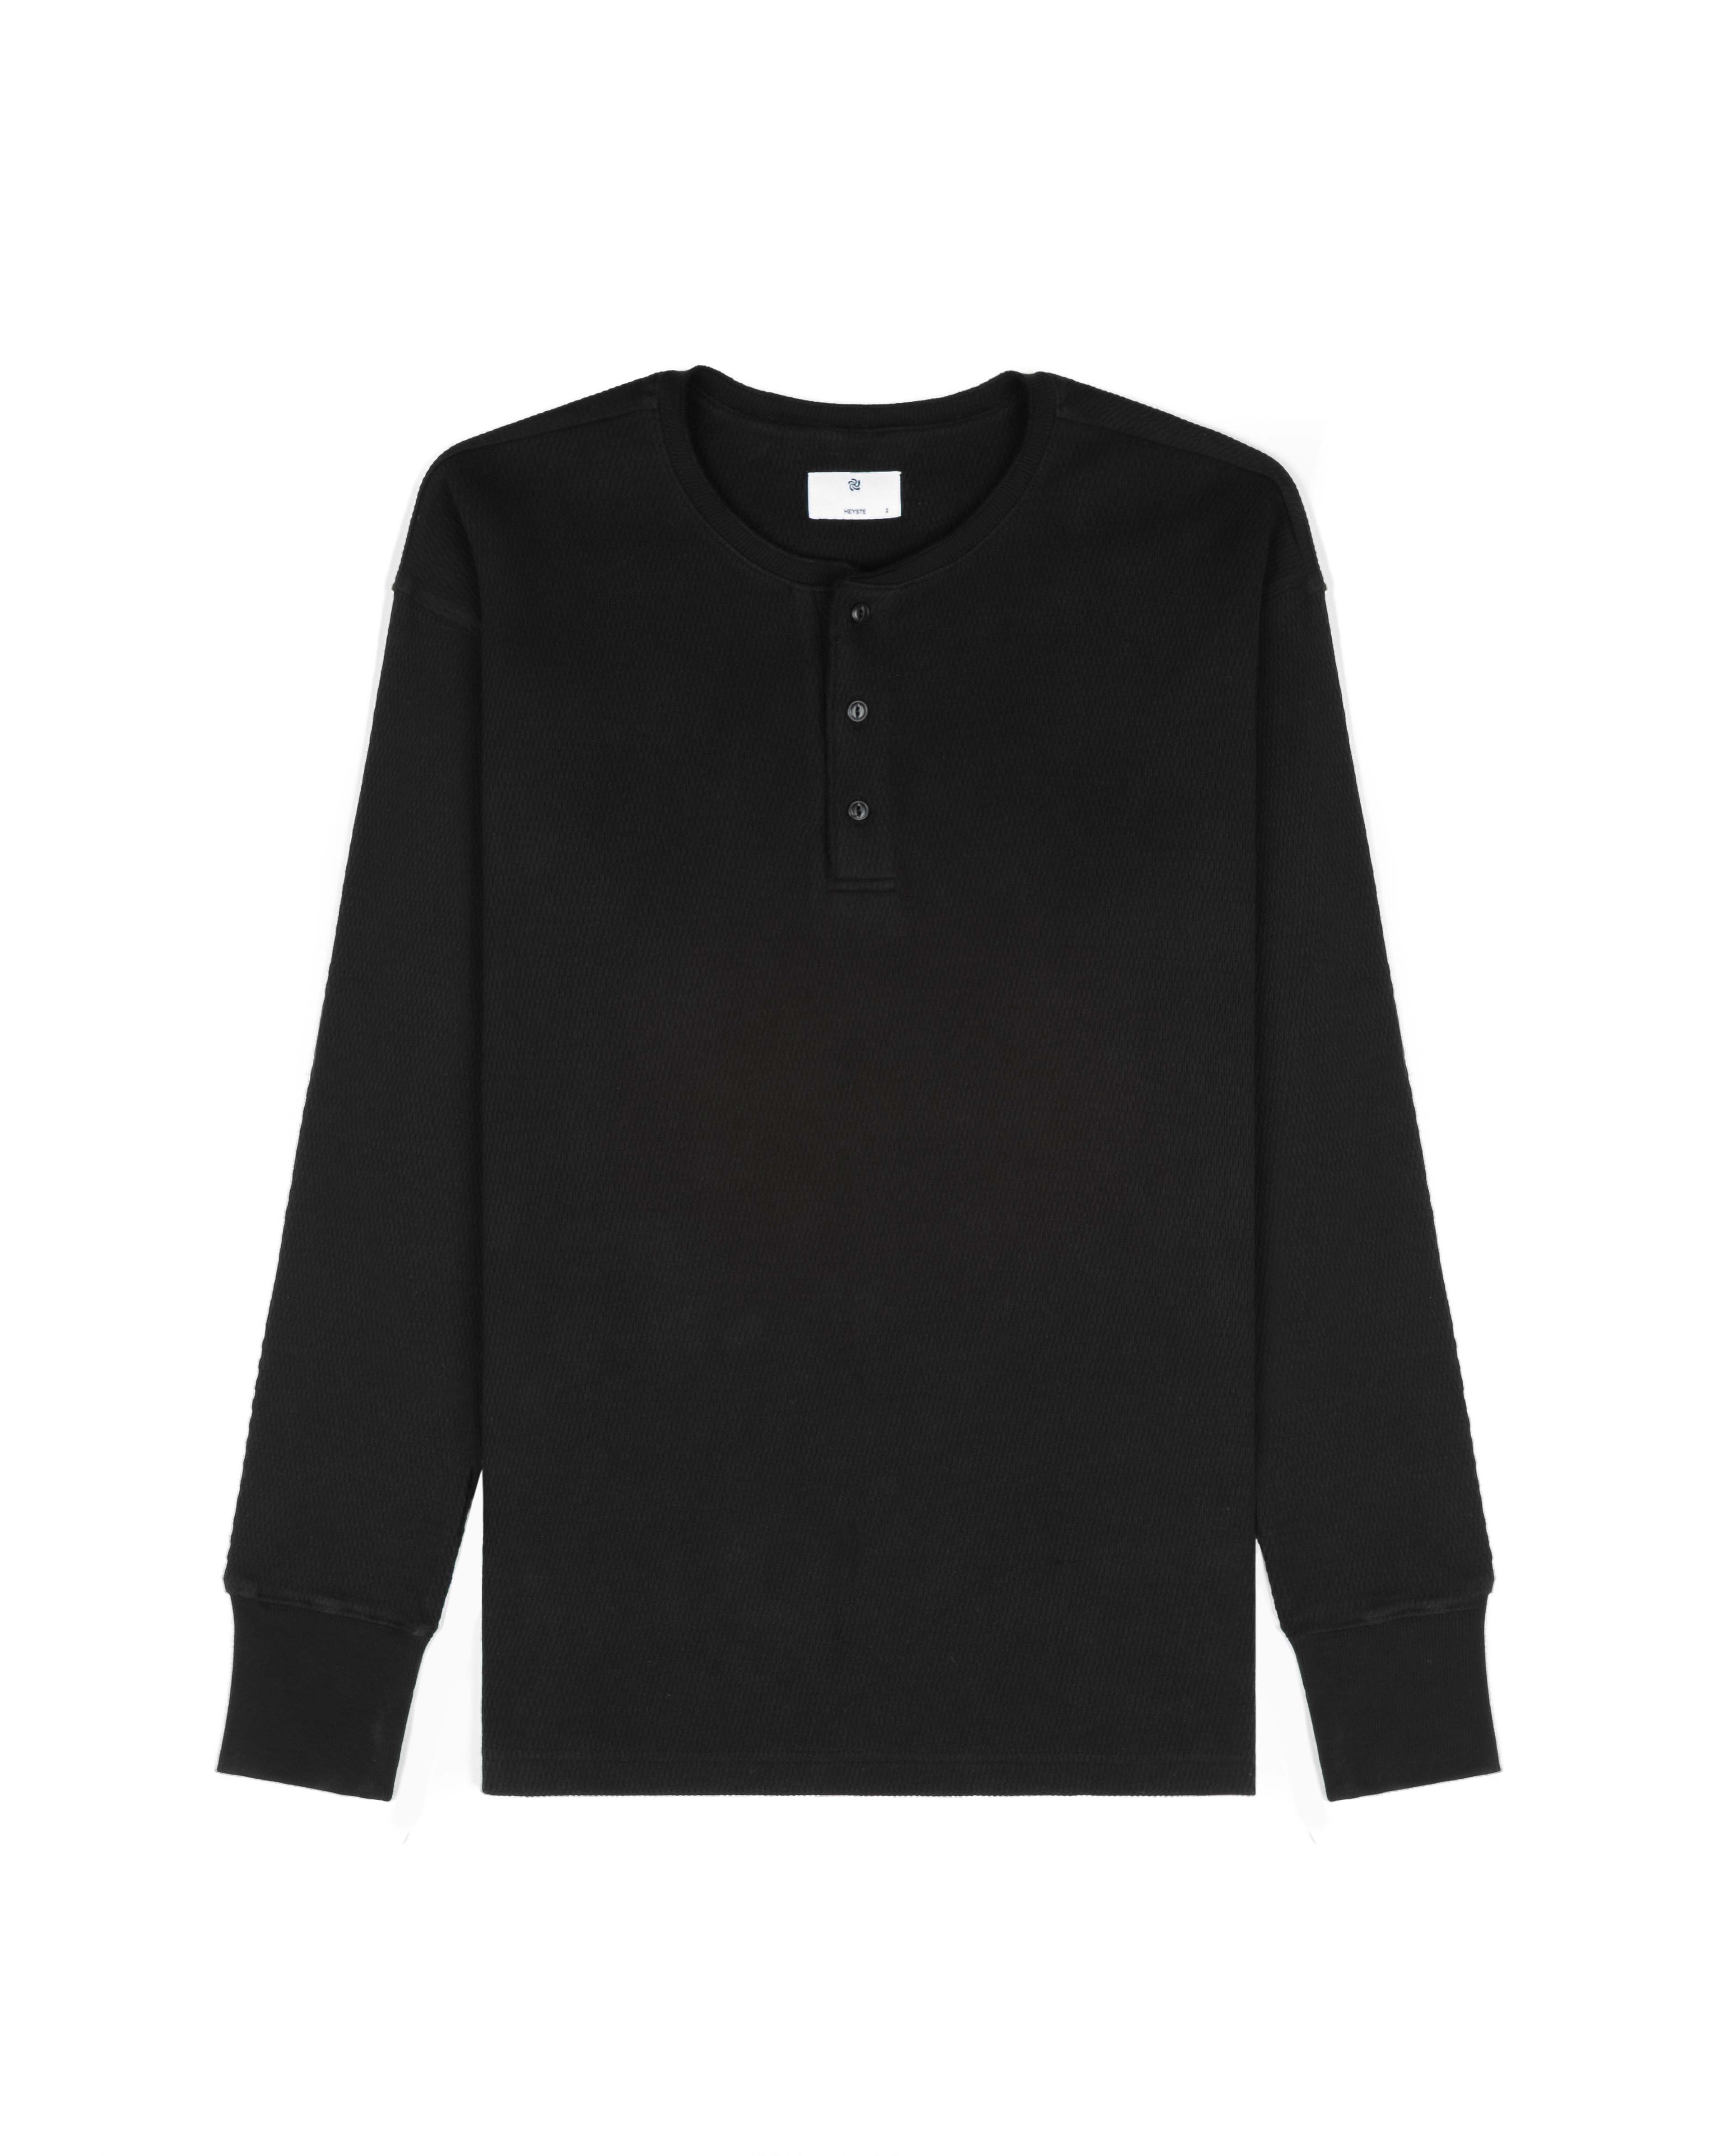 3 Button Thermal Knit Henley Shirt / vintage black